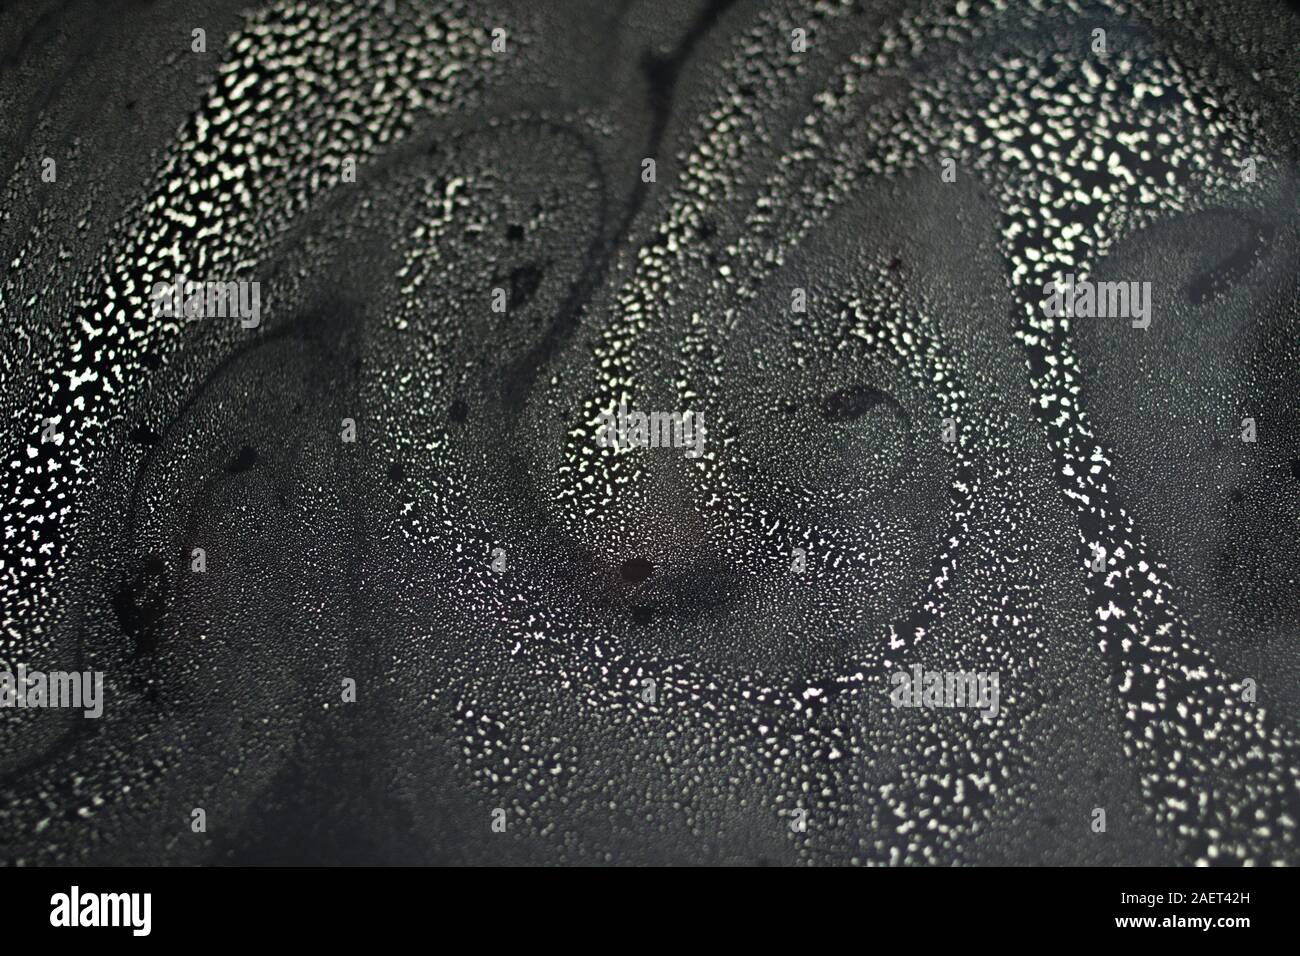 pollen on water hydrodynamic swirls and patterns Stock Photo